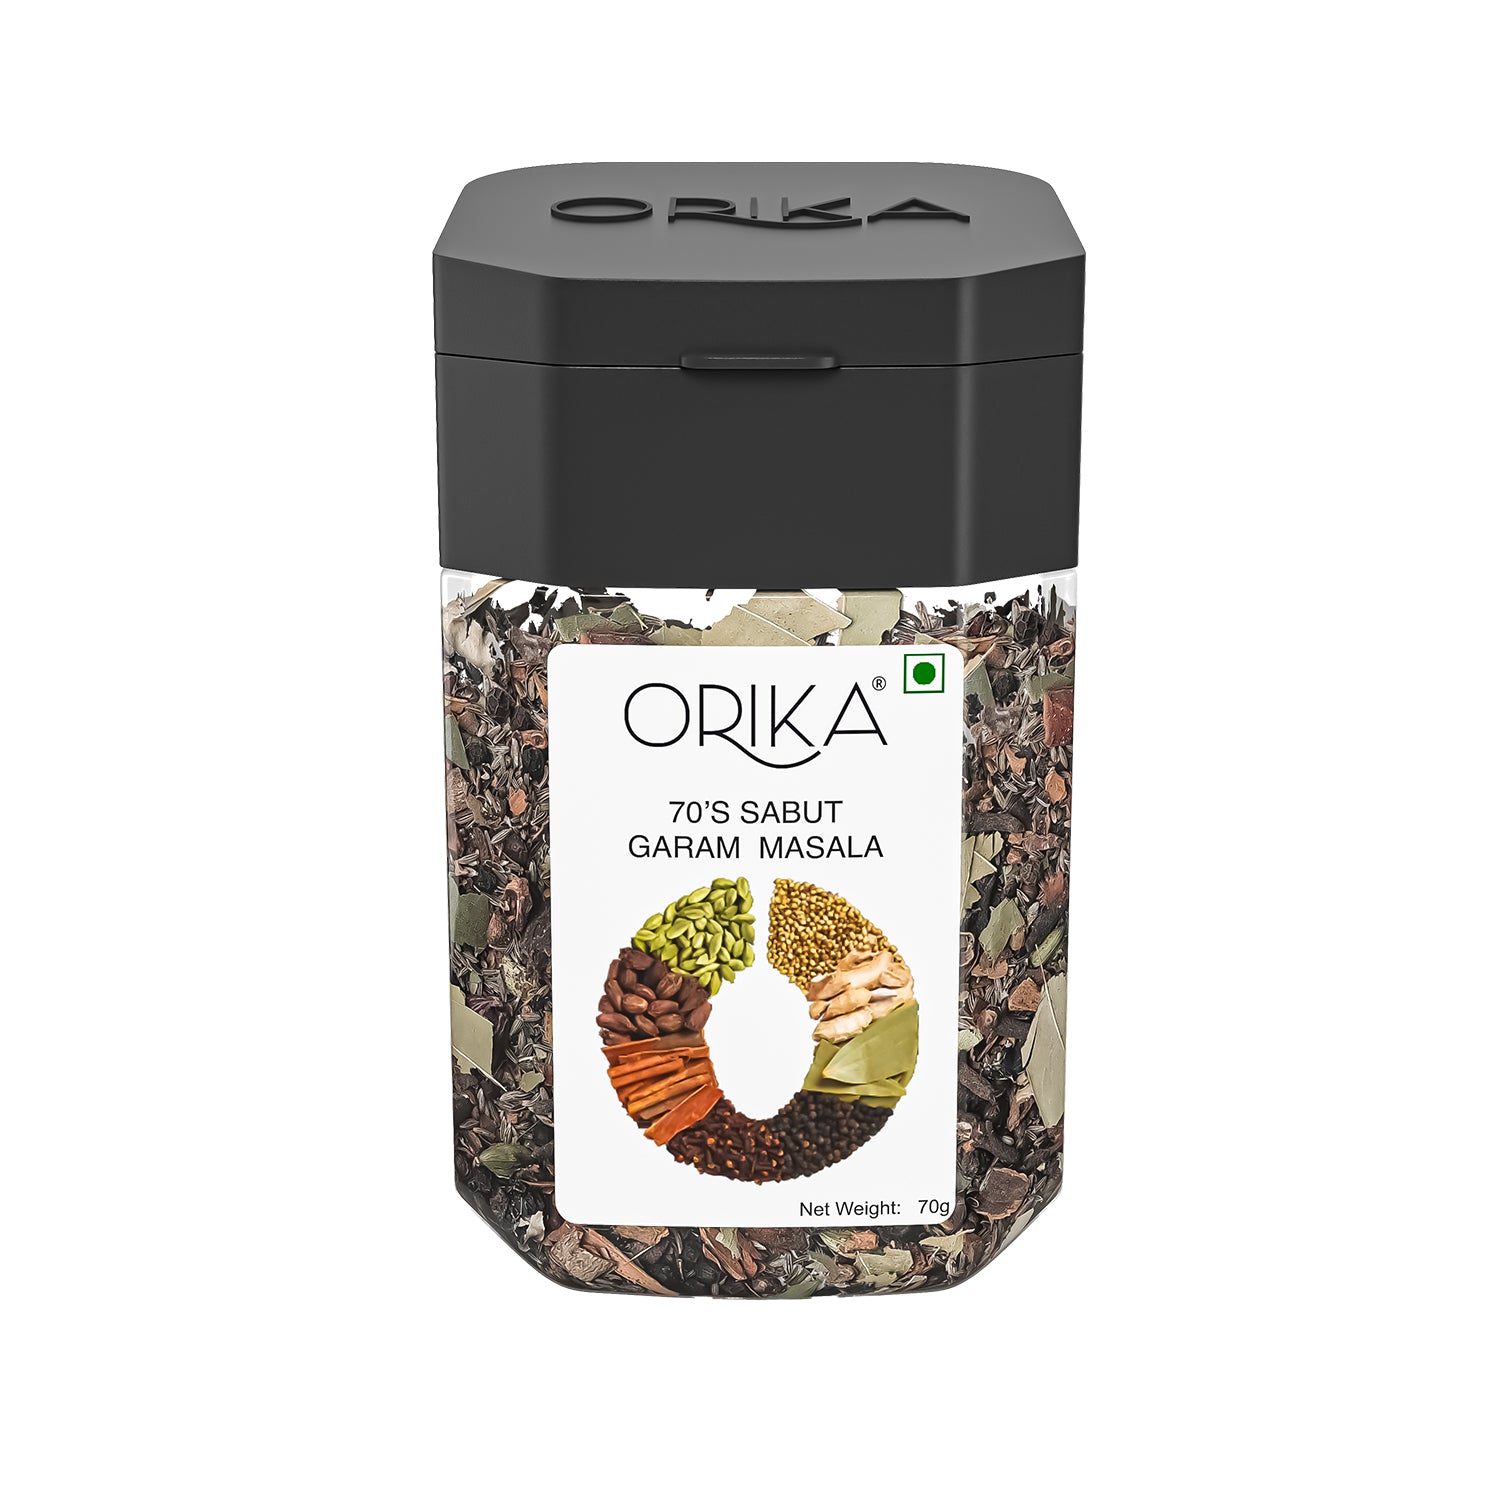 Orika's 70's Sabut Garam Masala, 70g - Orika Spices India